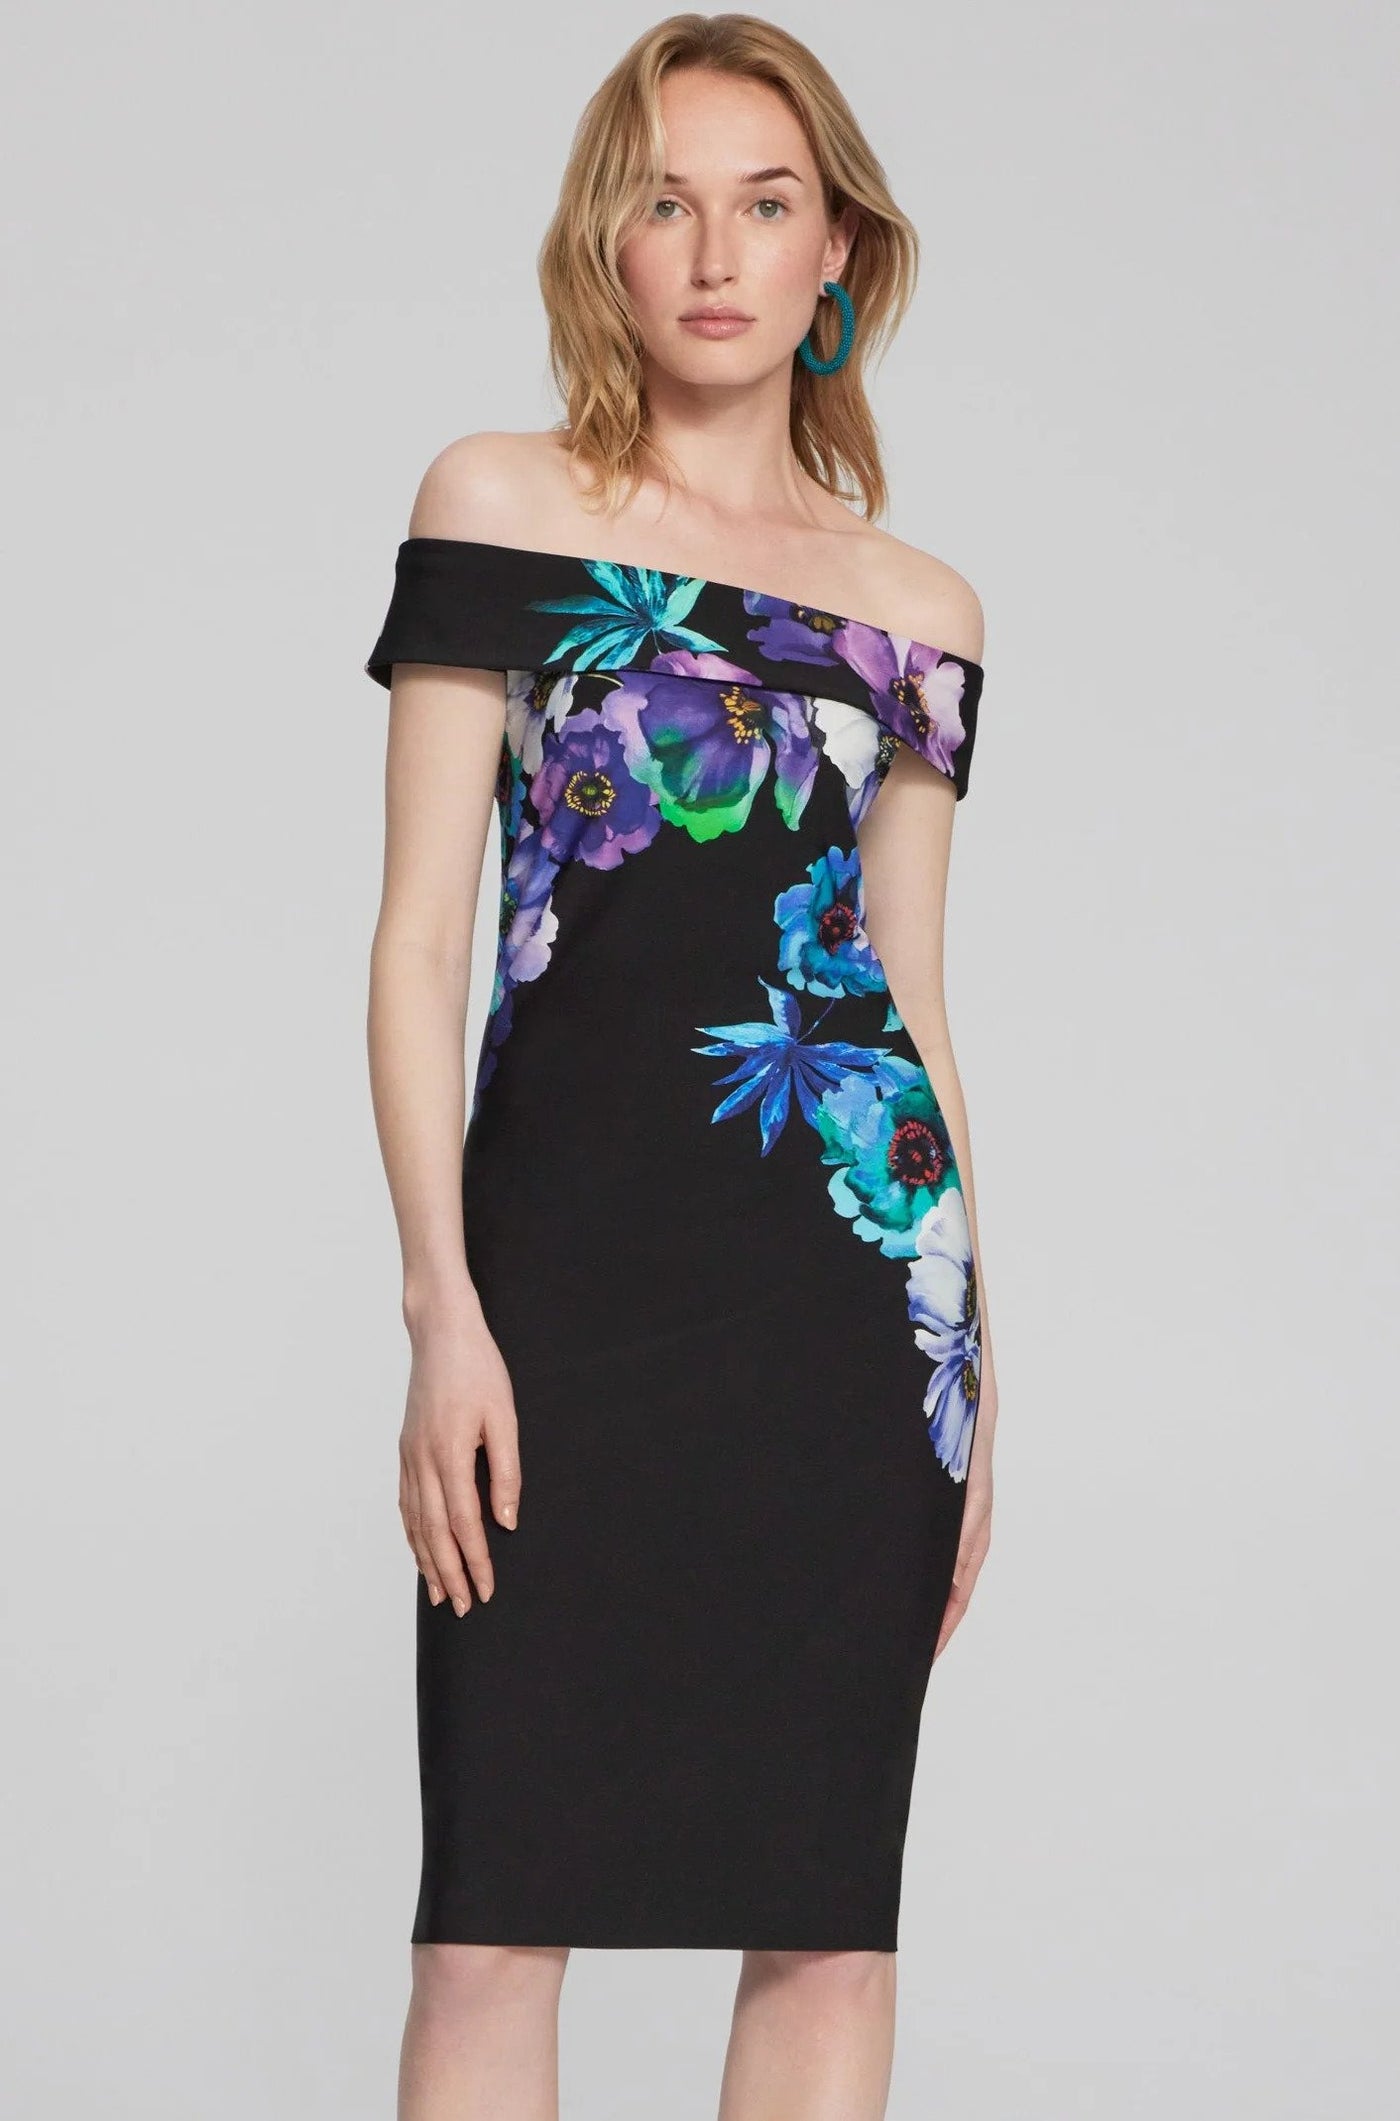 Floral Print Drop Shoulder Dress Style 241775 Front.